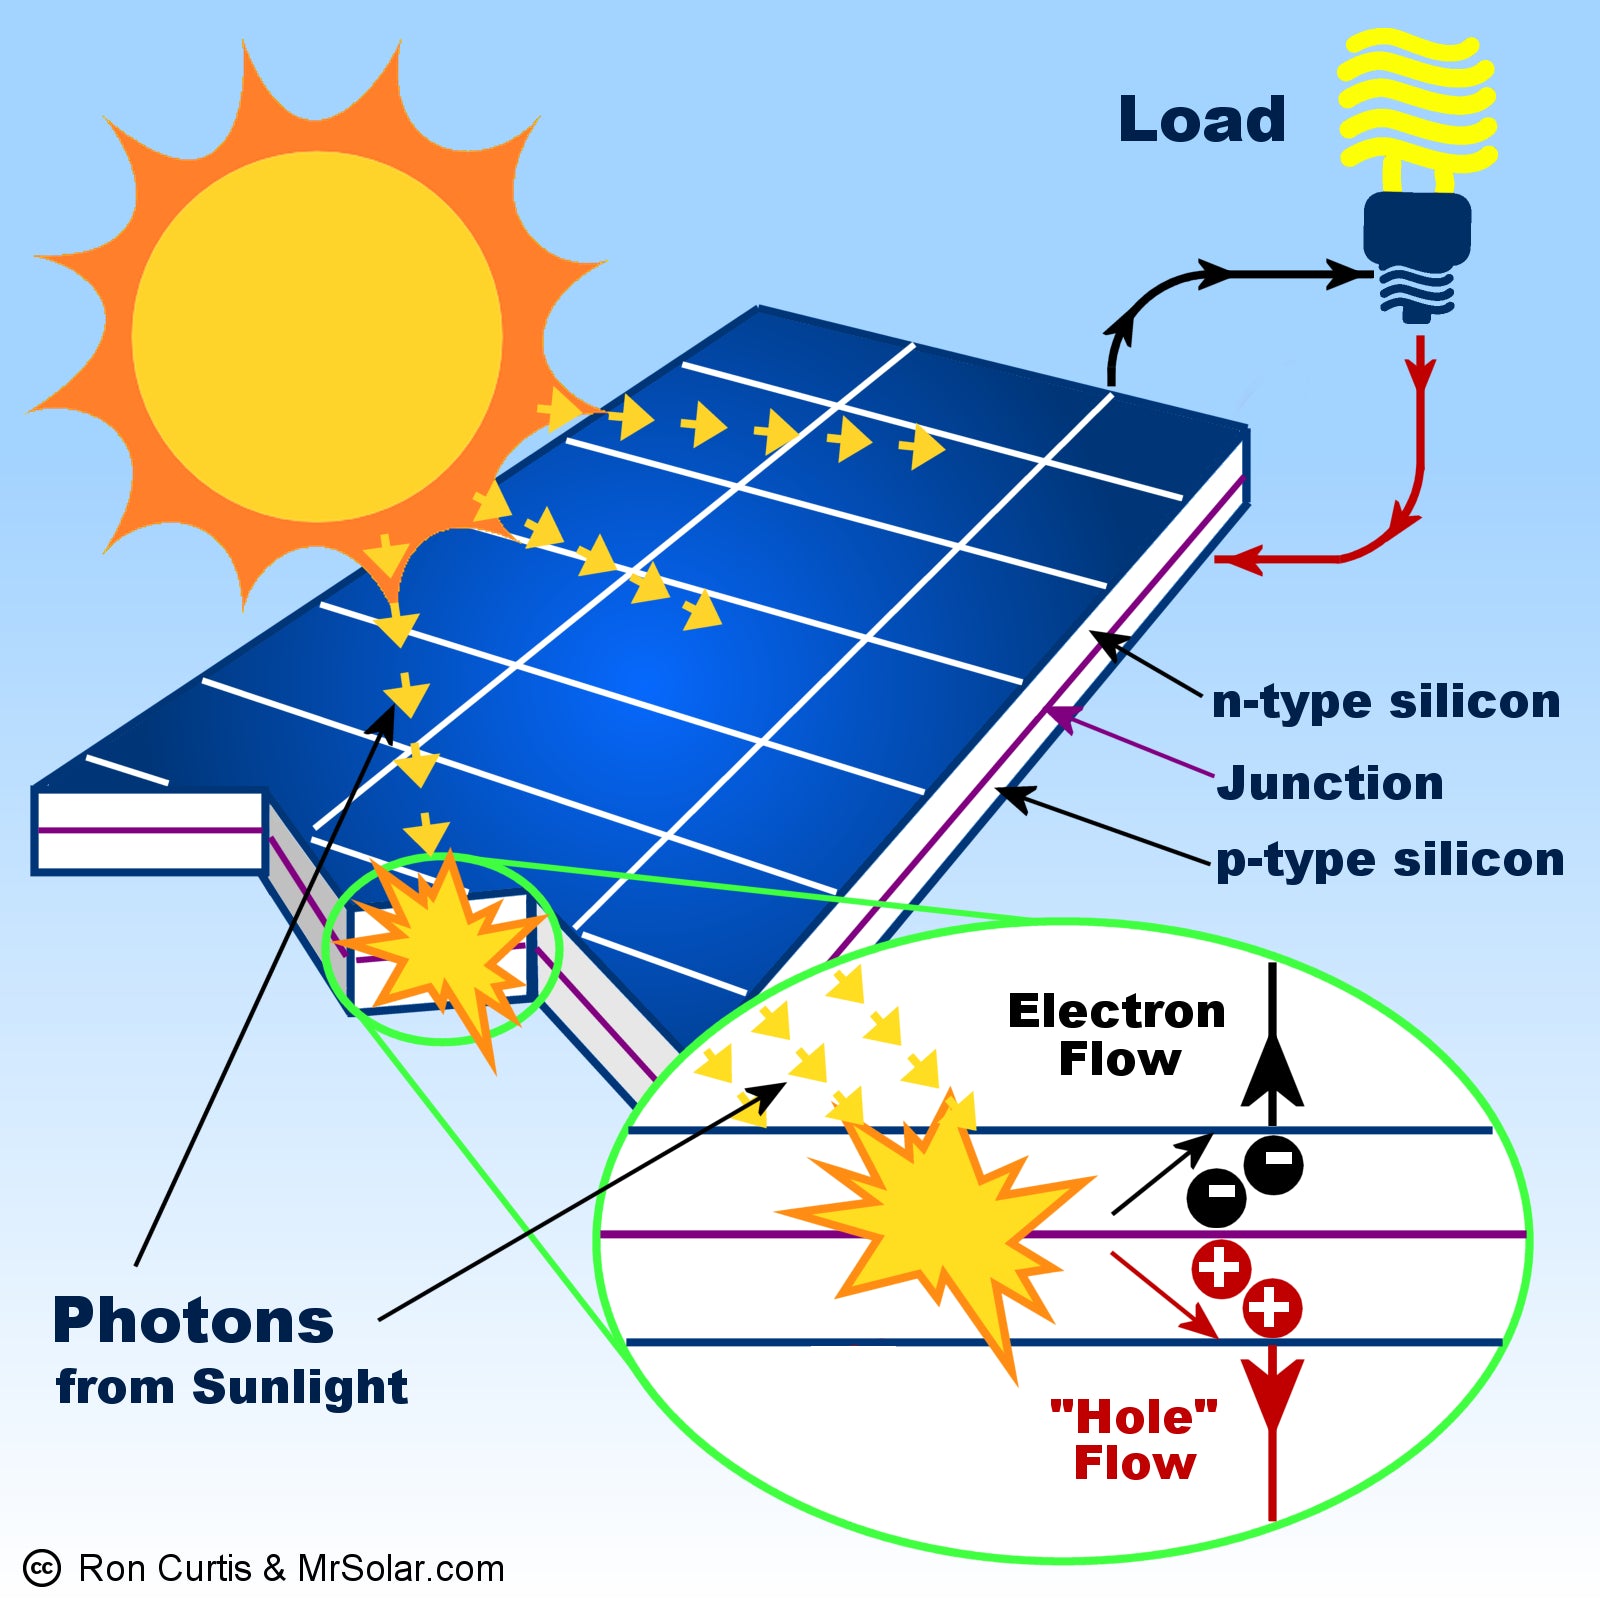 The Benefits of Solar Panels